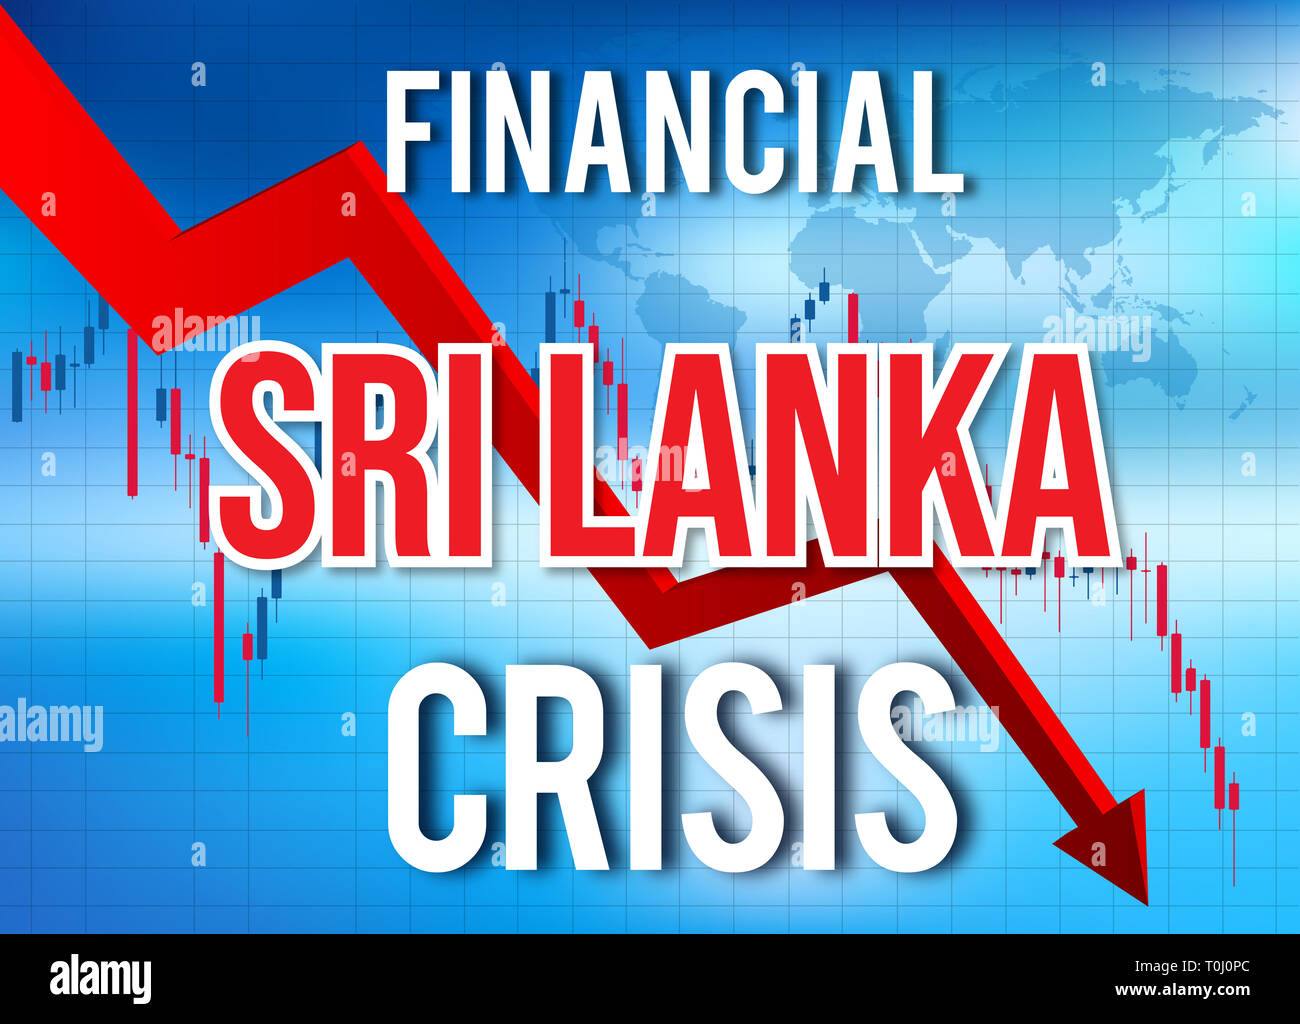 Economic crisis sri lanka